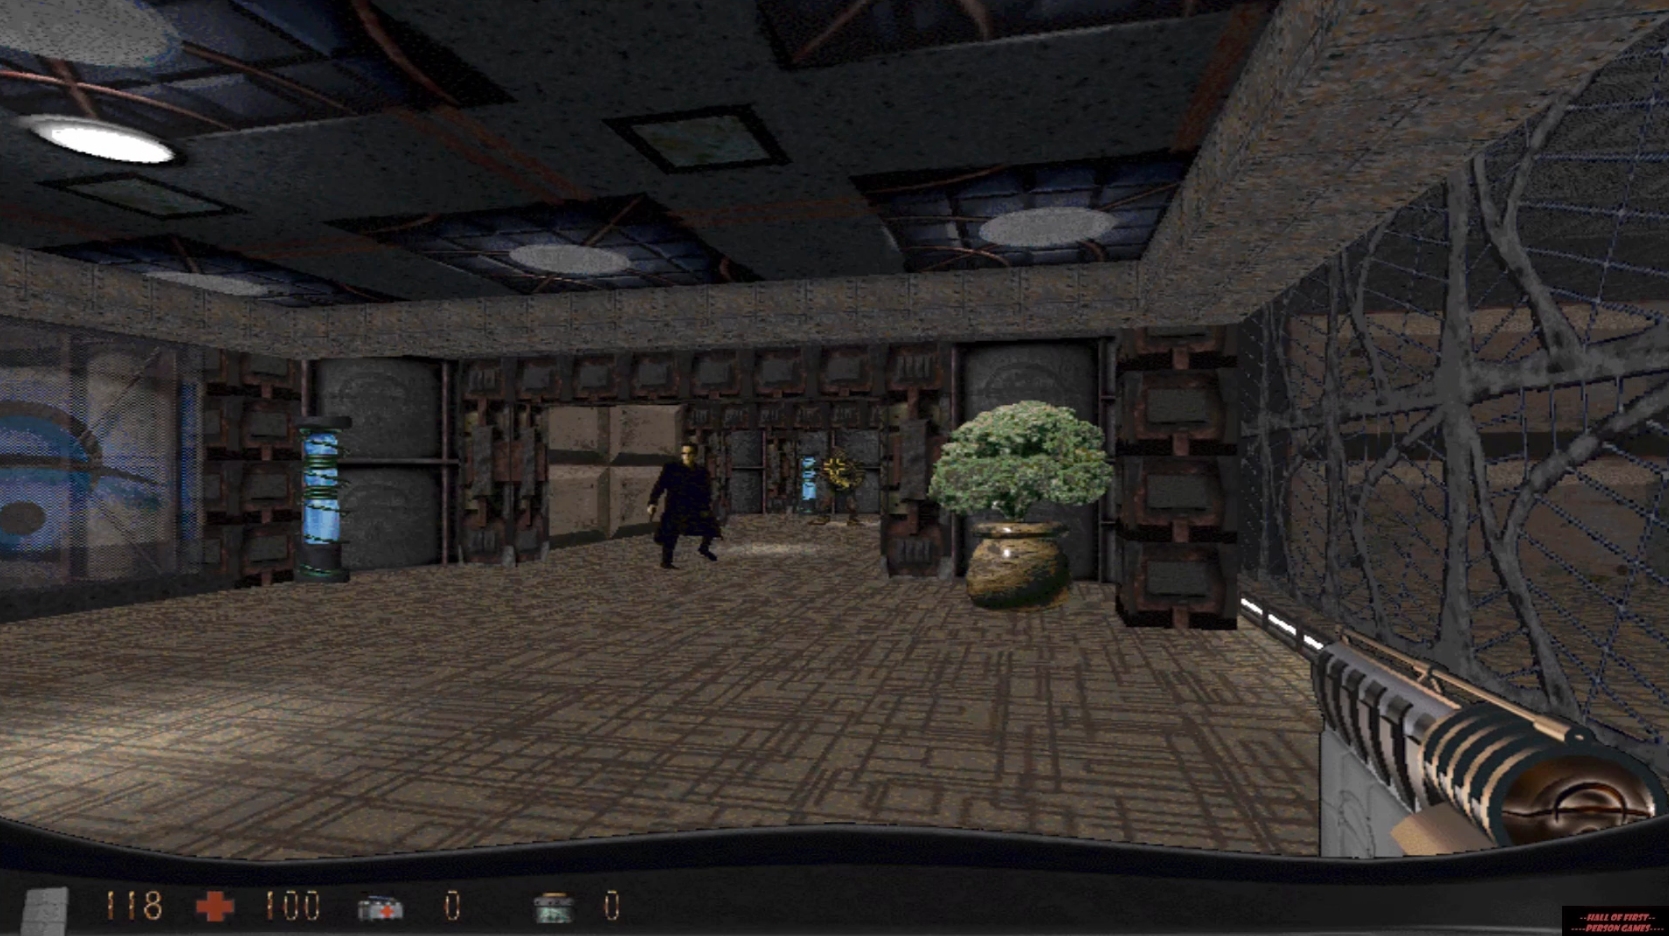 Hades 2 (1999) - PC Gameplay / Win 10 